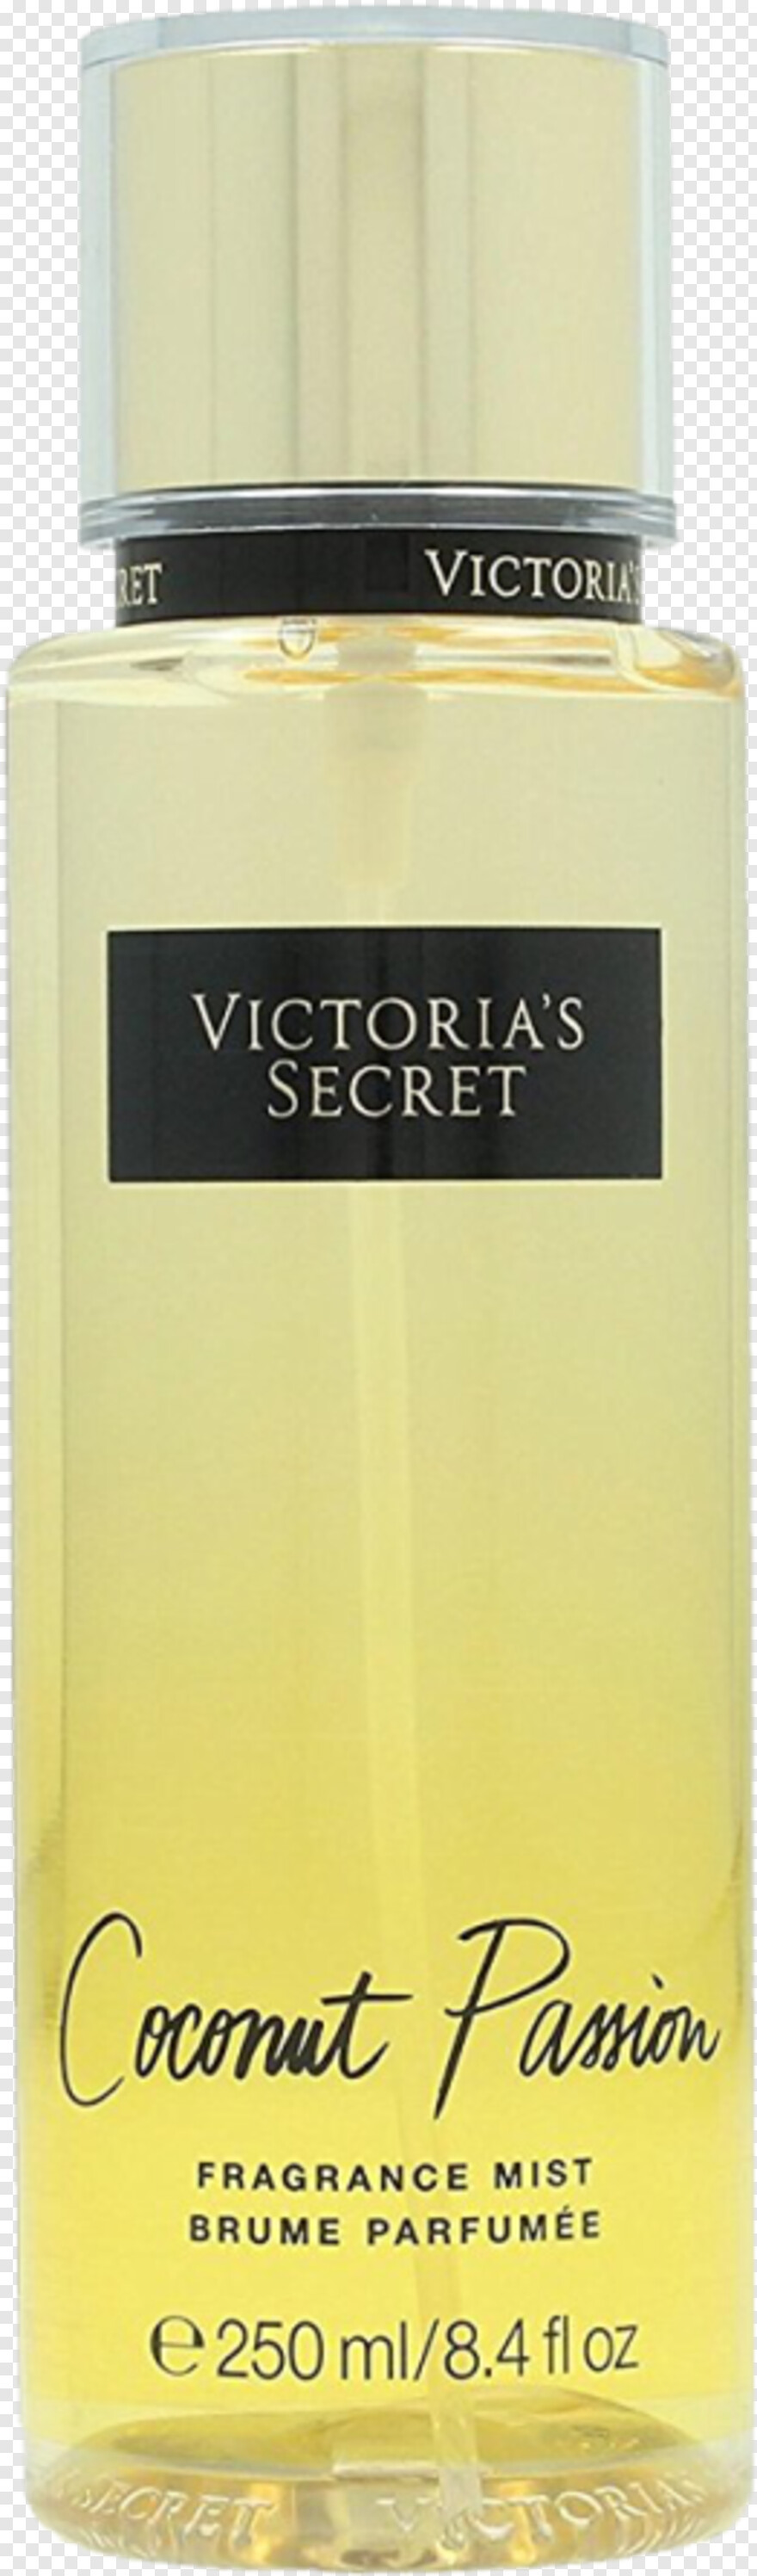 victoria-secret-logo # 336683